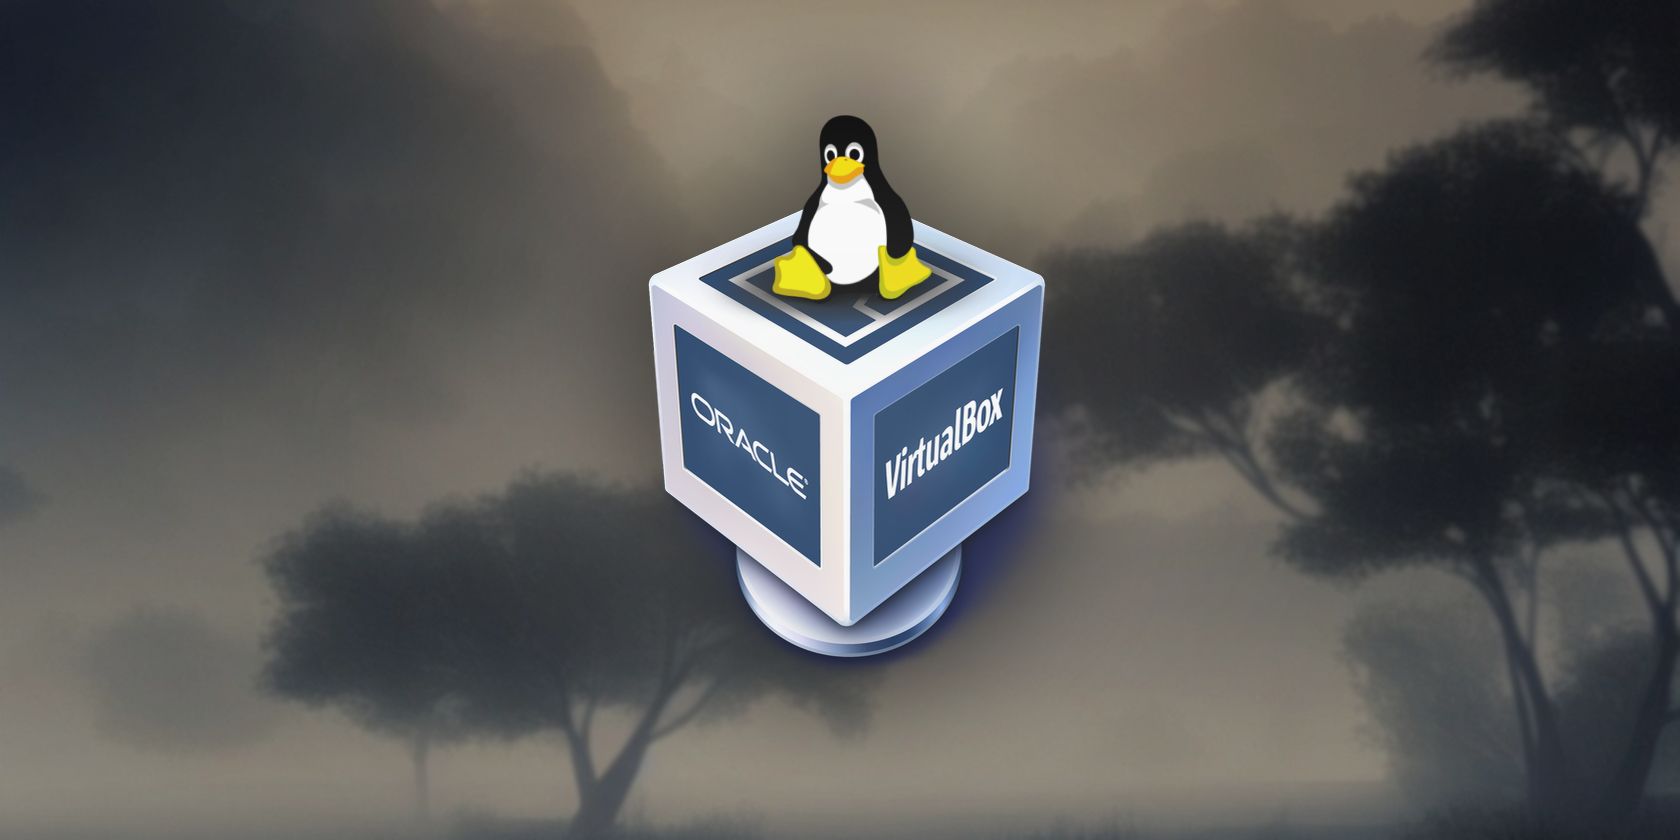 linux mascot tux sitting on virtualbox logo